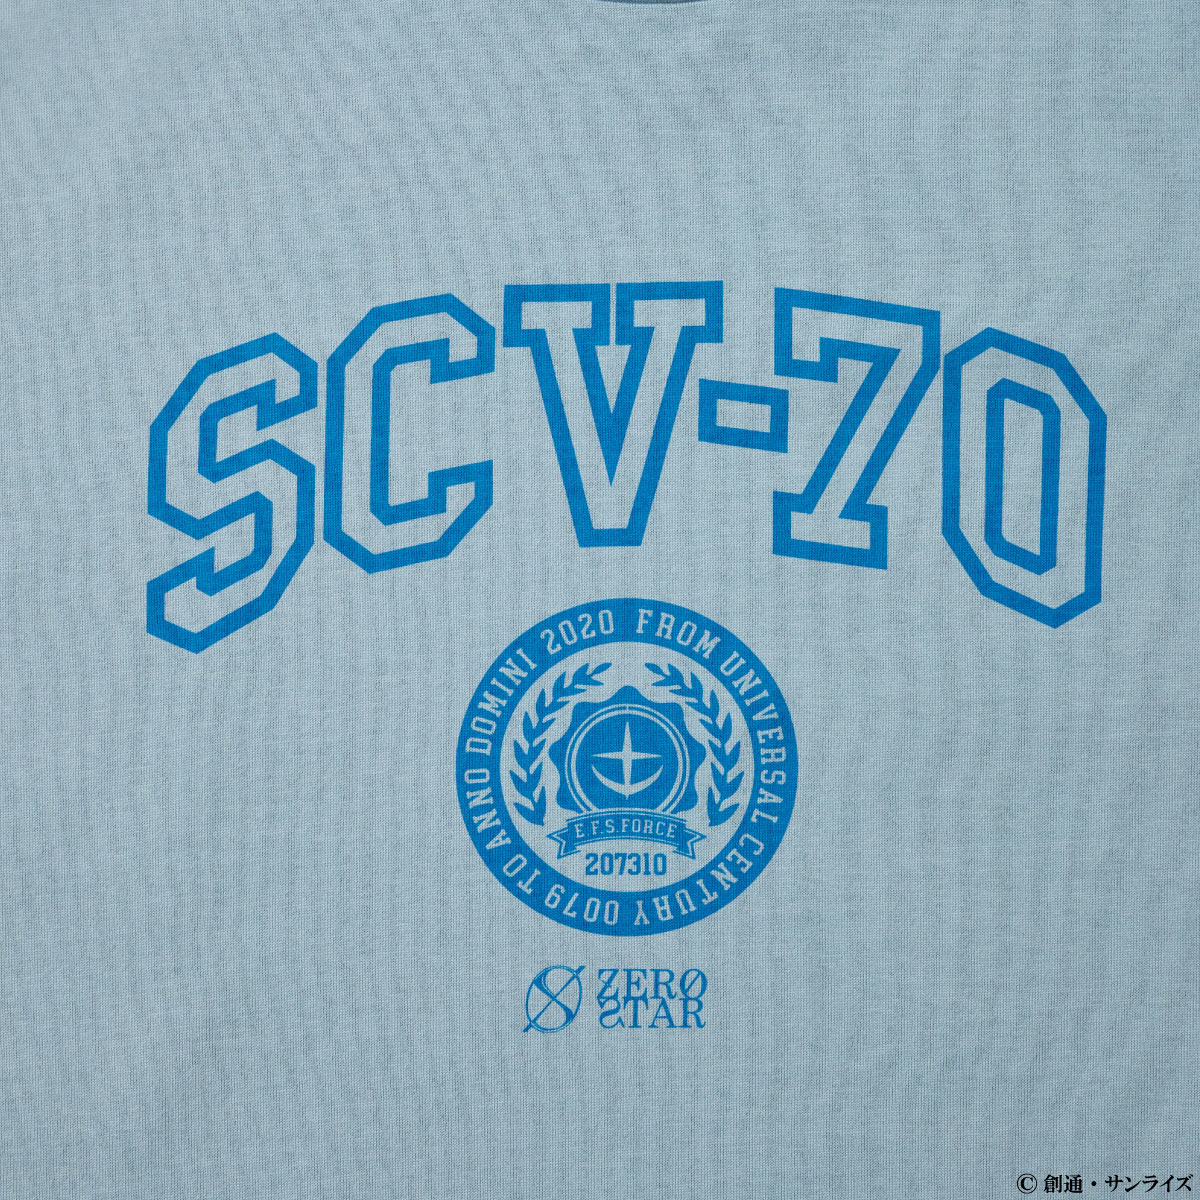 STRICT-G ZERO STAR『機動戦士ガンダム』Tシャツ SCV-70